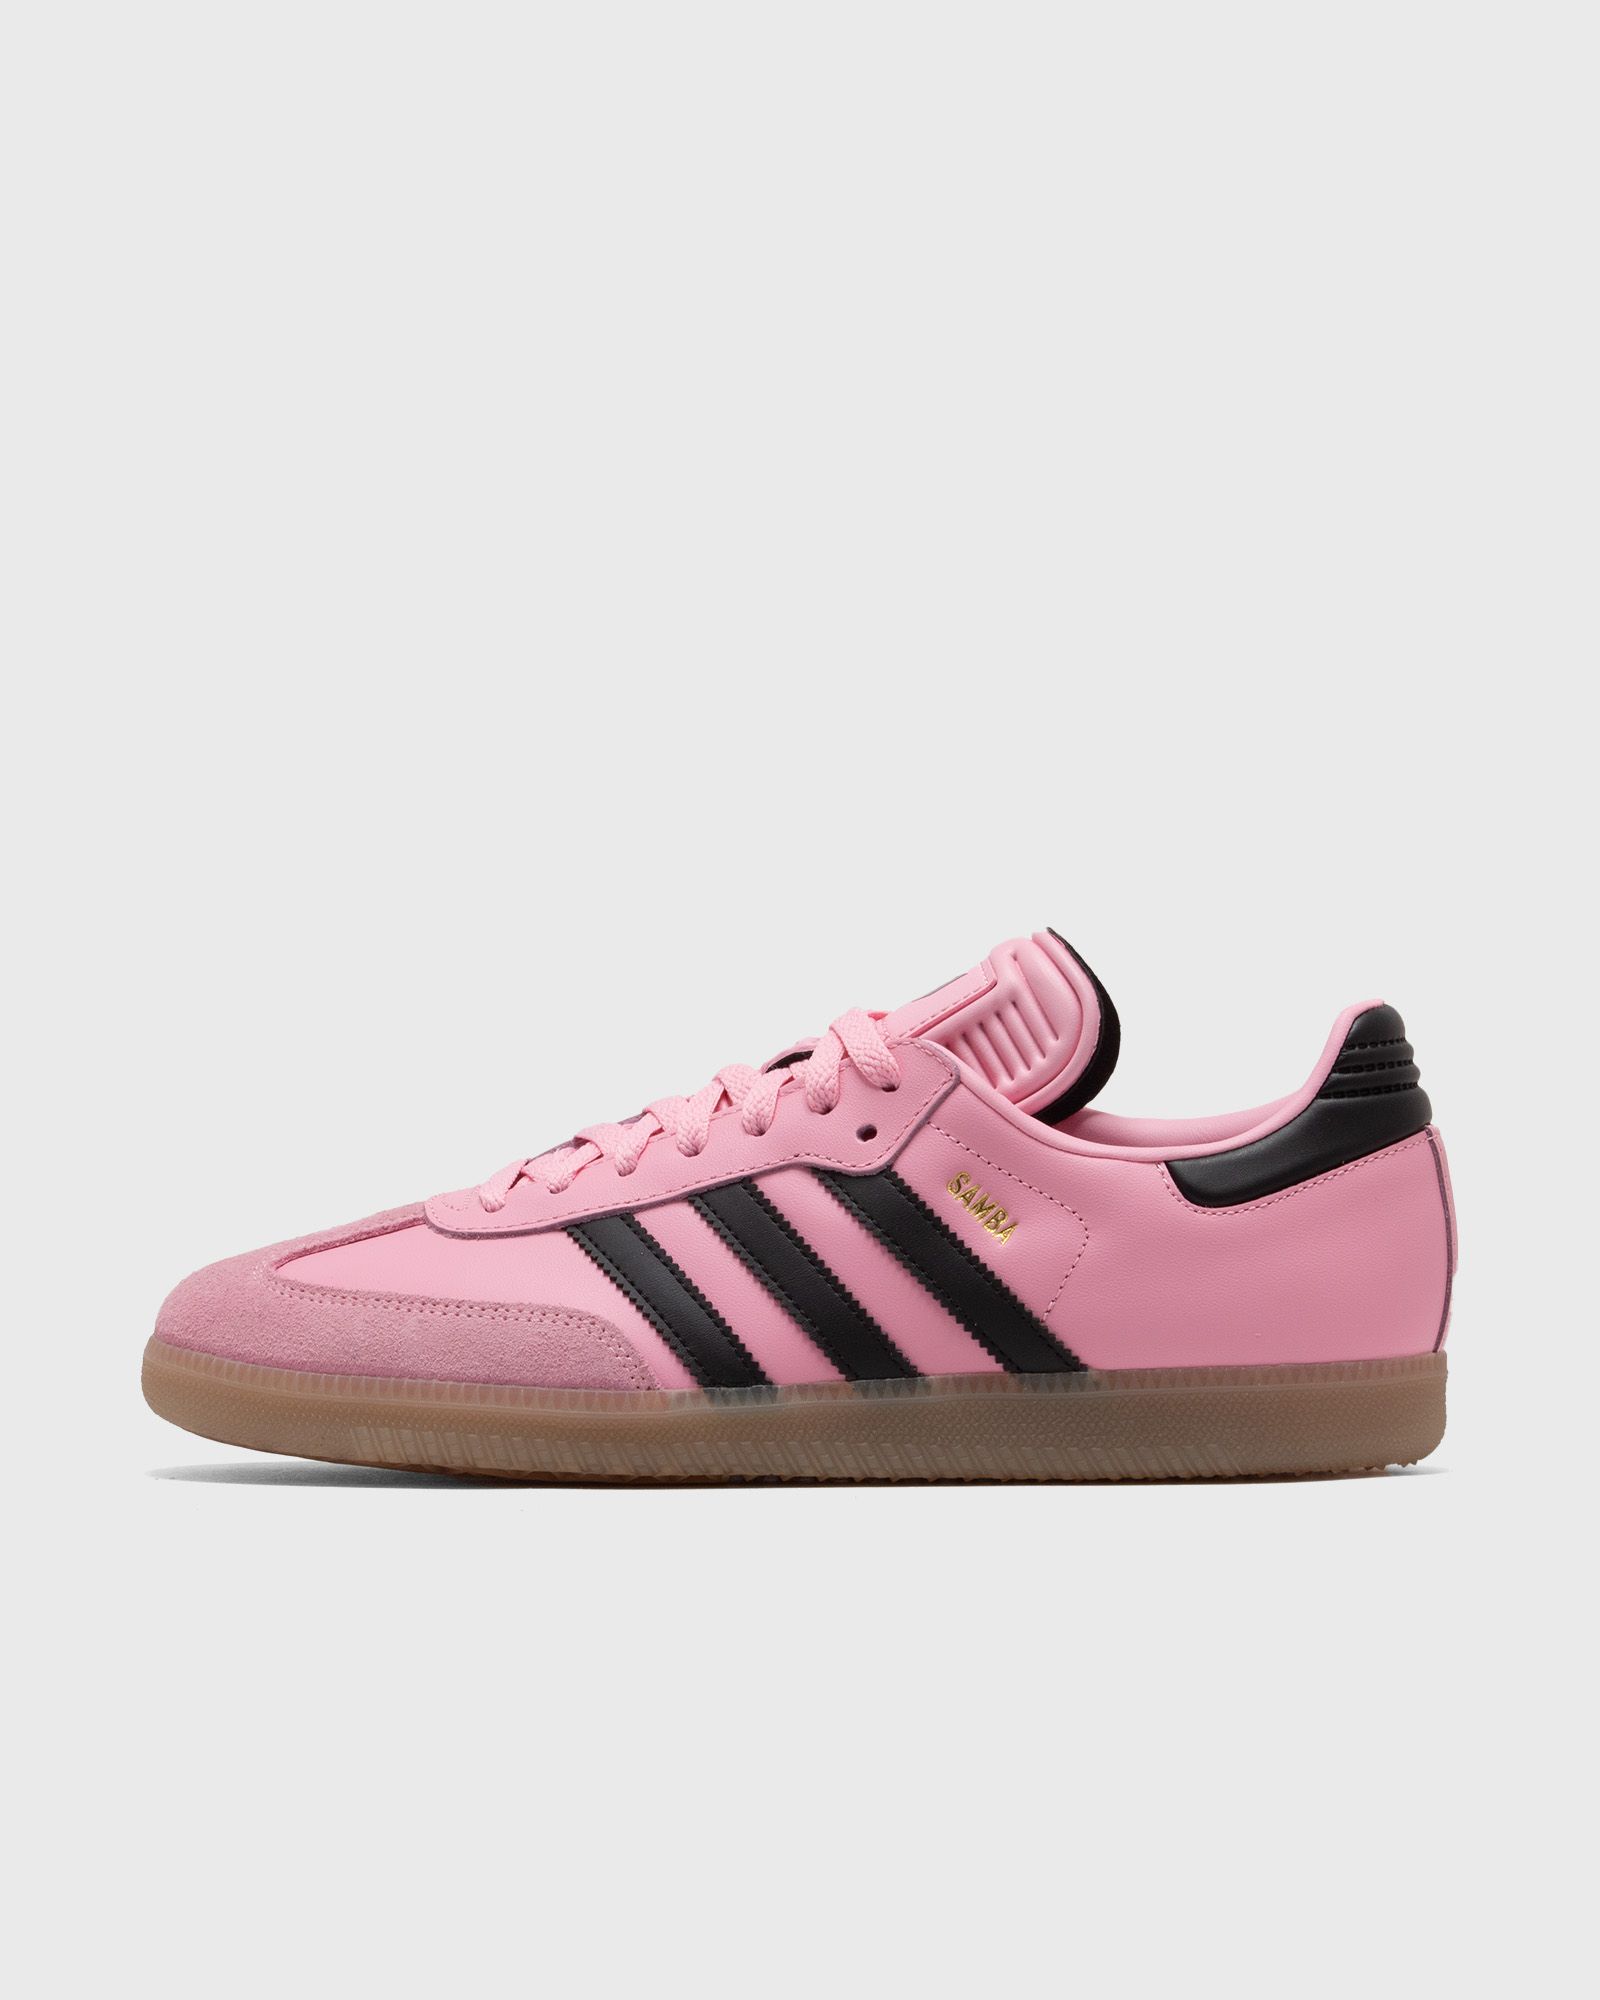 Adidas SAMBA MESSI MIAMI men Lowtop pink in Größe:36 2/3